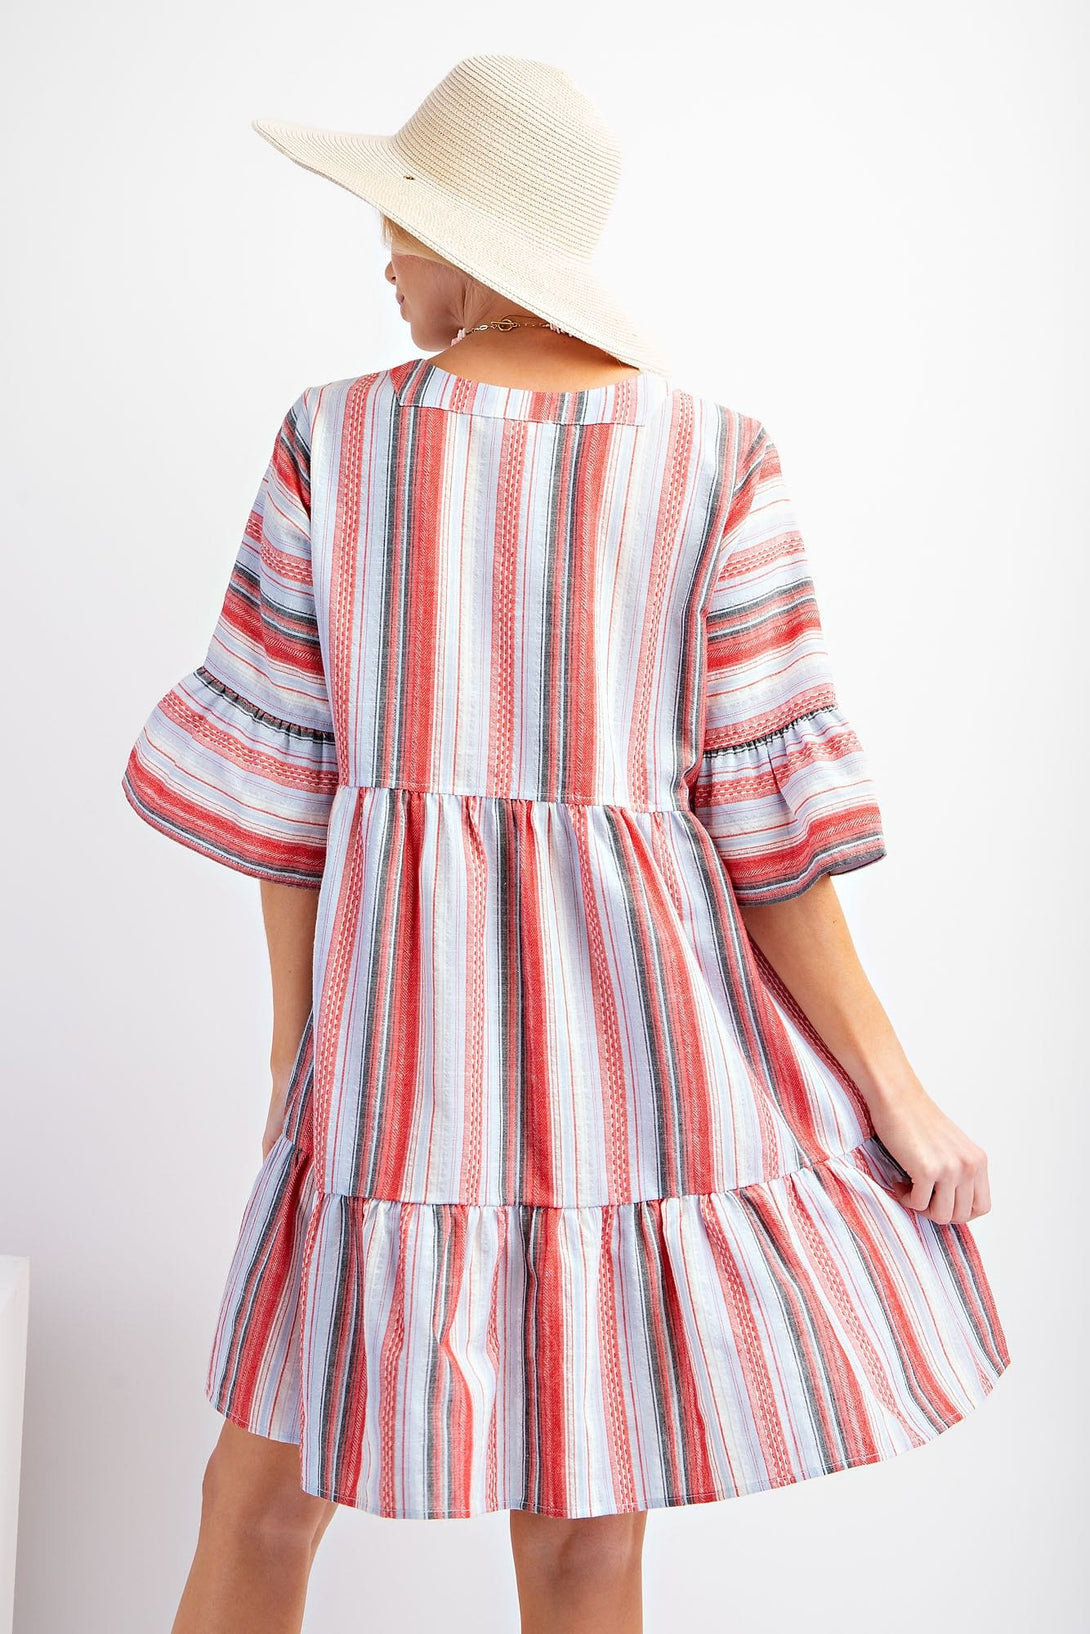 Easel Half Sleeve Striped Embroidery Detailed Ruffle Bottom Dress